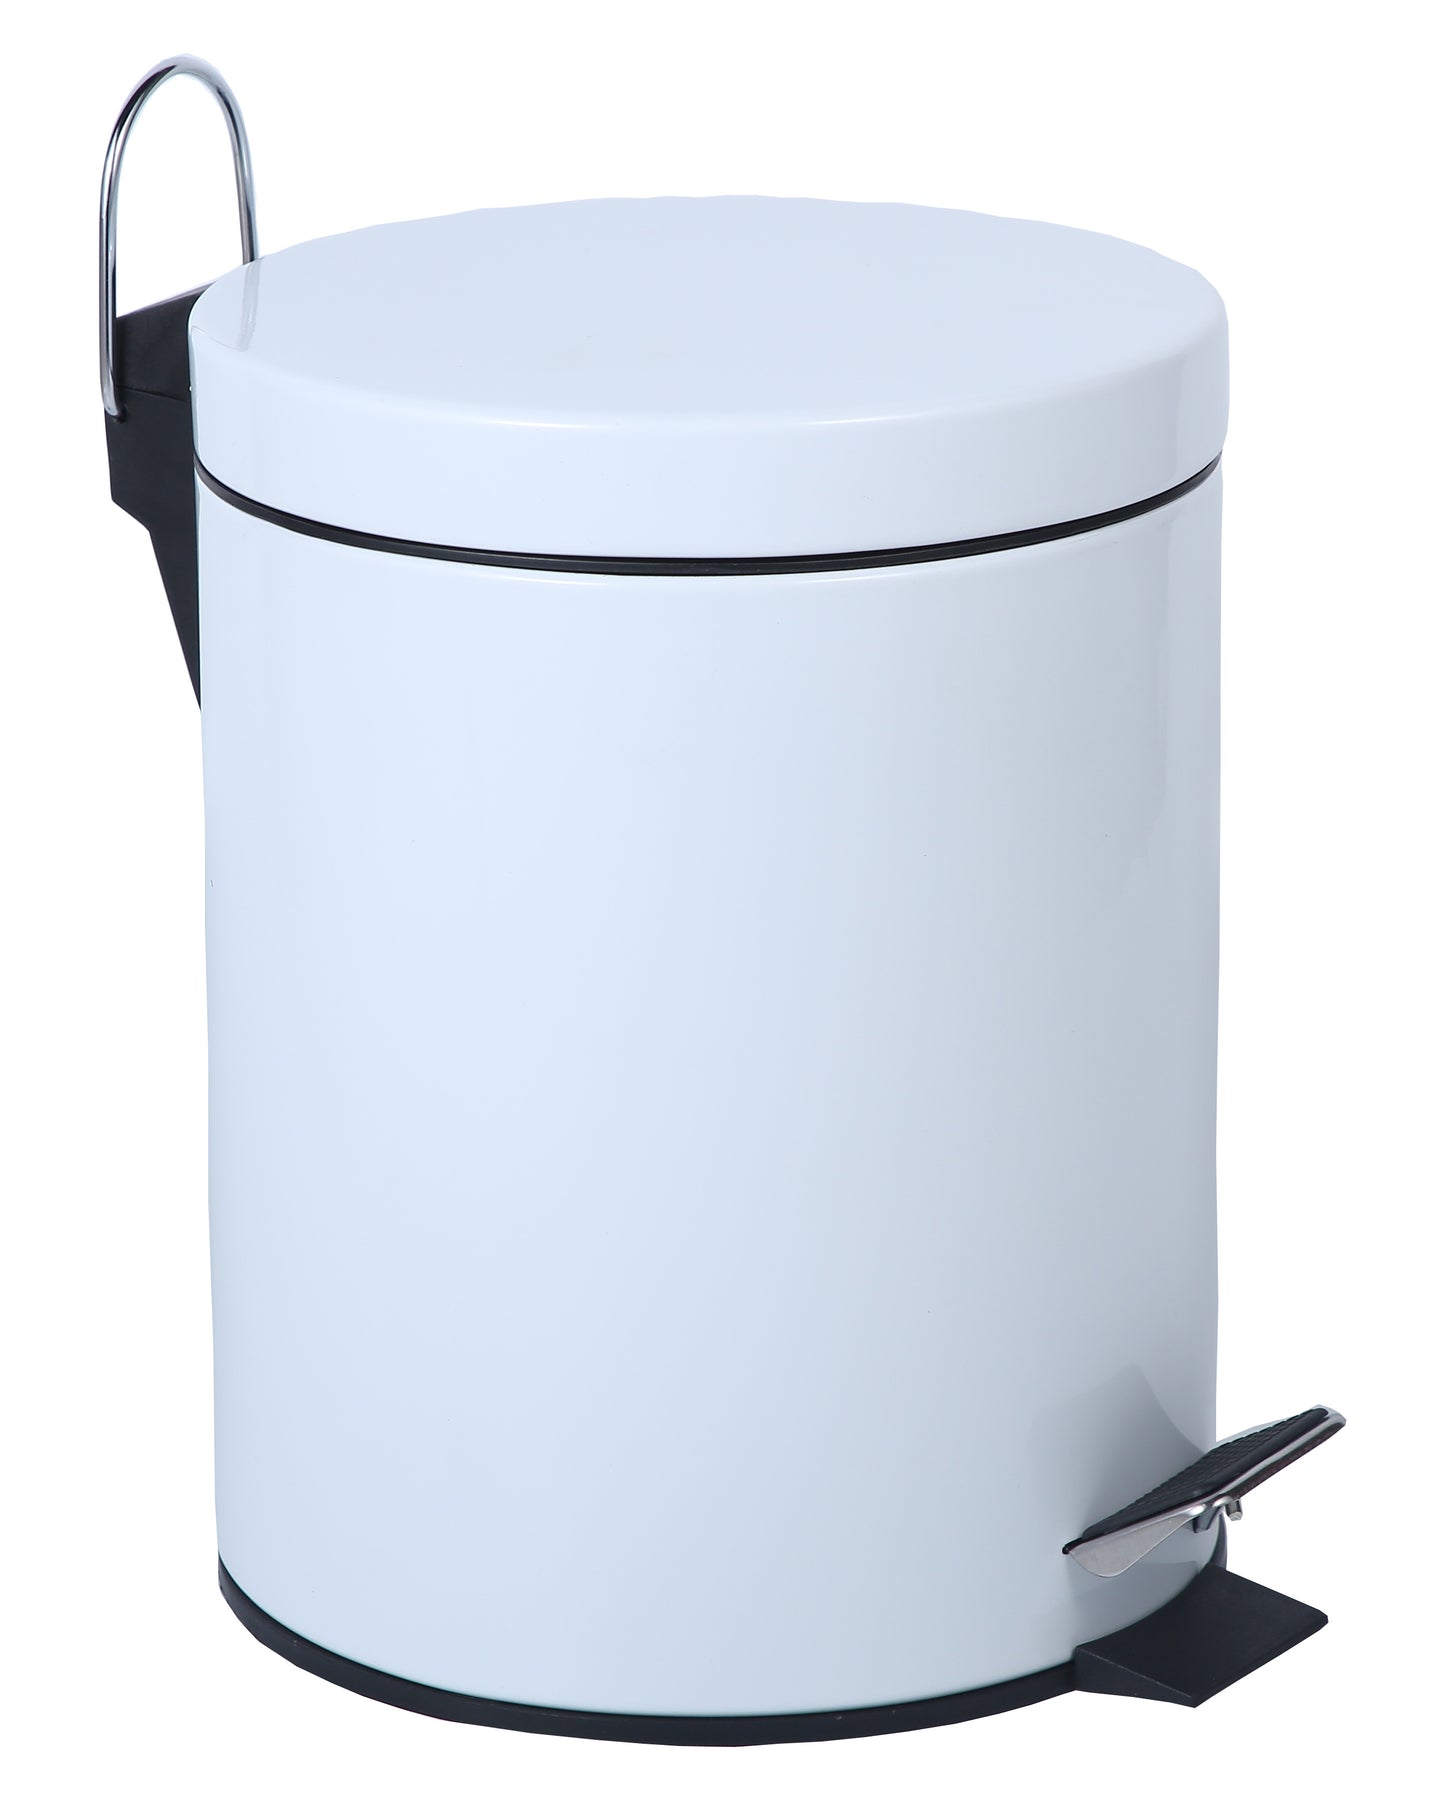 Buckingham White Powder Coated Pedal Bin Waste Trash Bin for Bathroom Kitchen Office 12 Litres